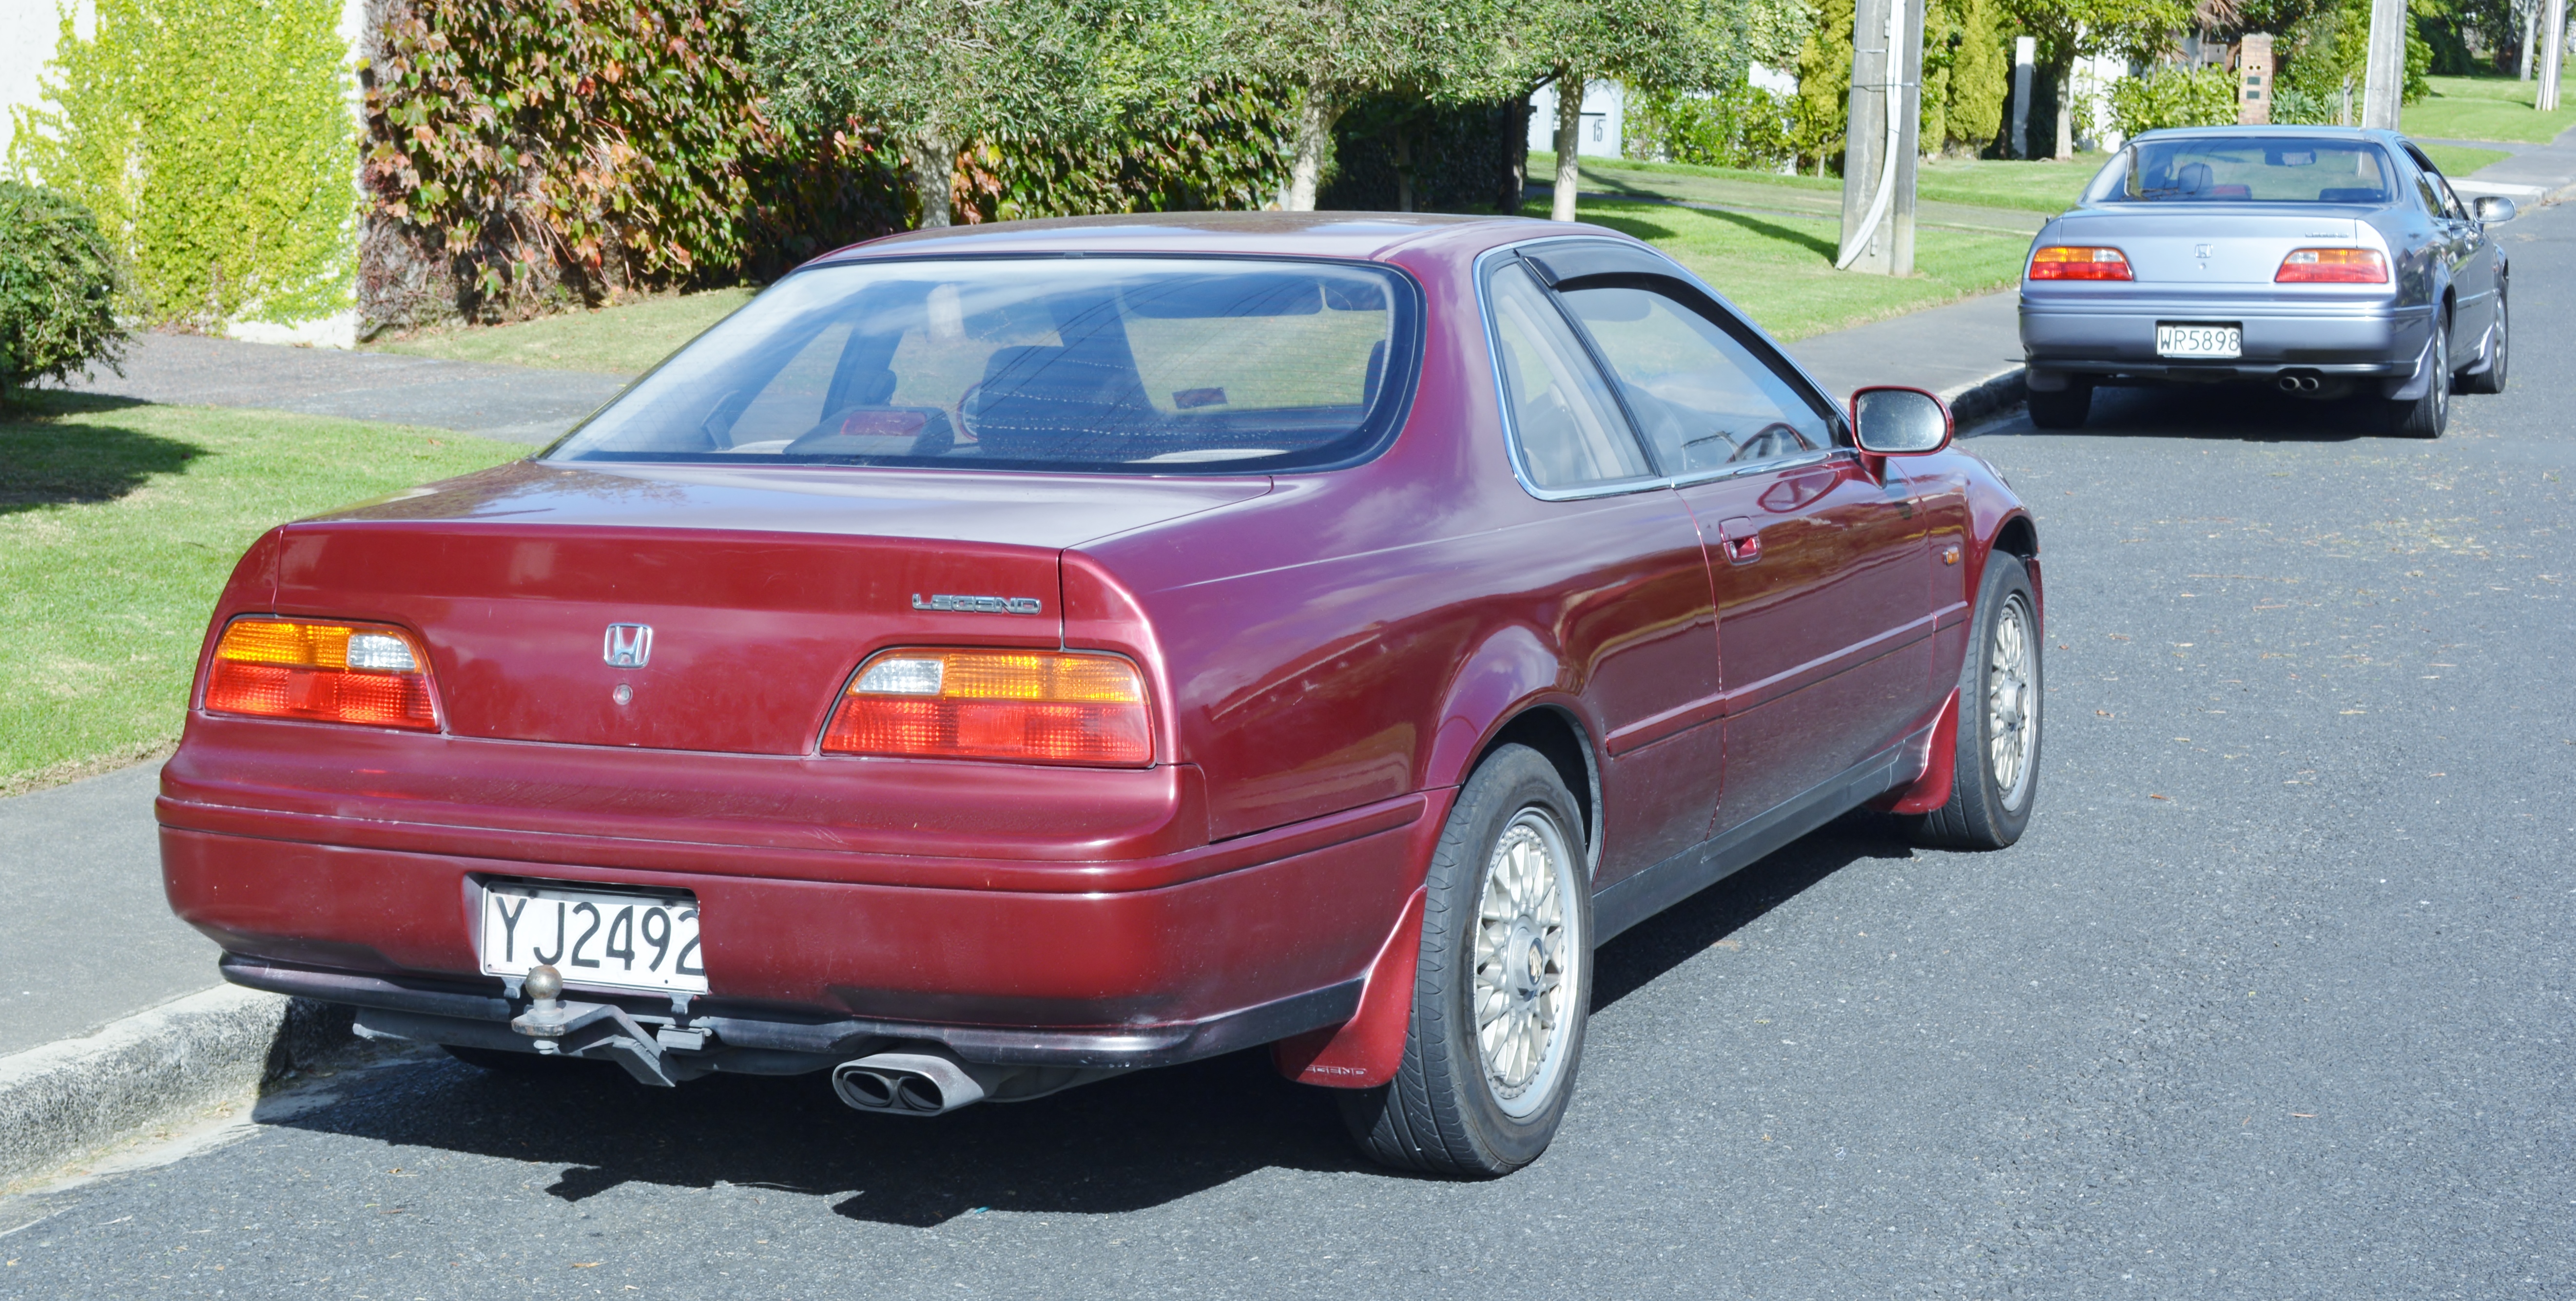 File:1992 & 1991 Honda Legend Coupe's (14041457230).jpg - Wikimedia Commons